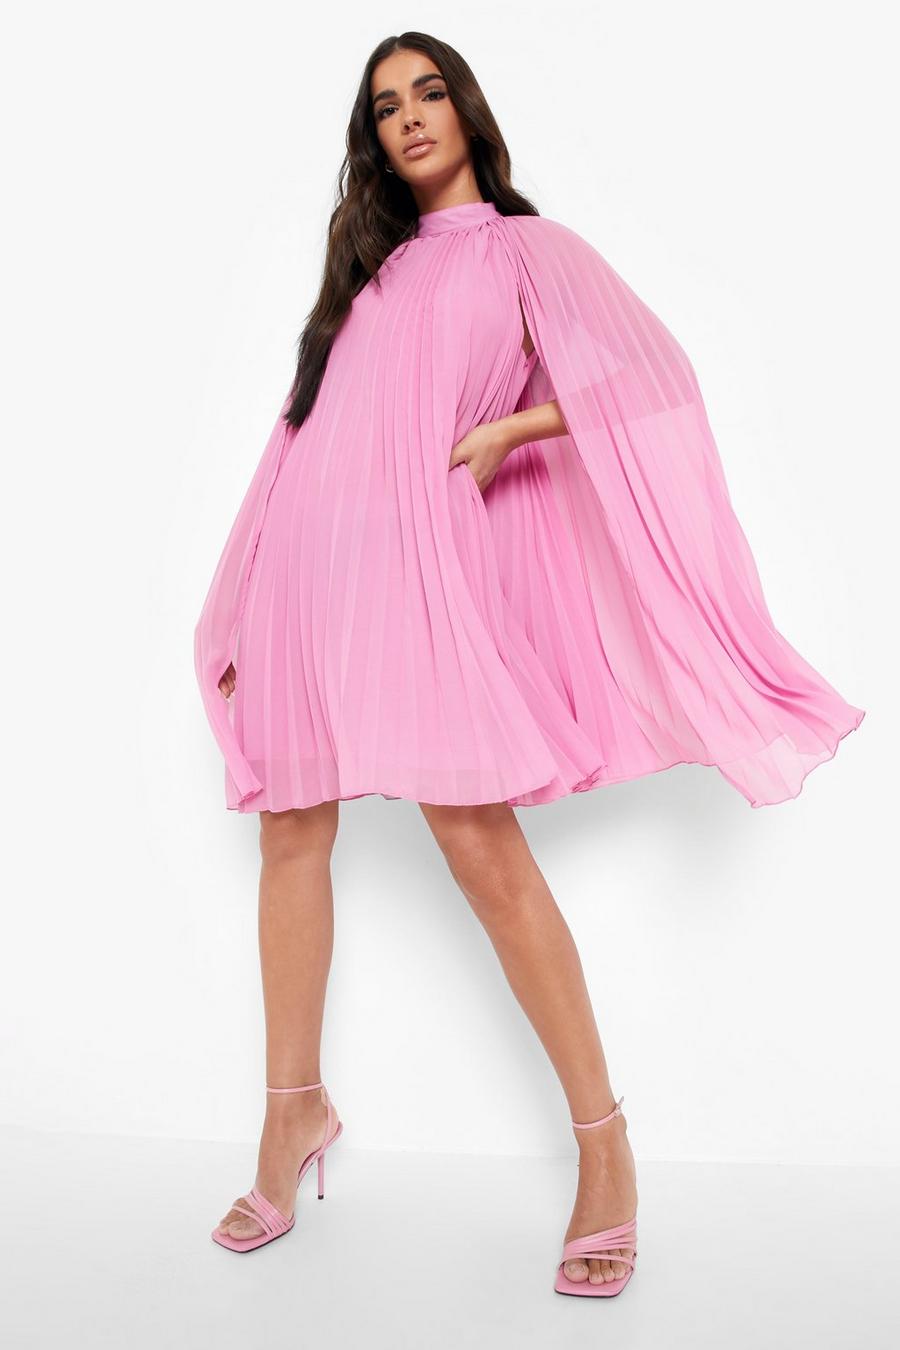 Bubblegum pink Pleated Cape Swing Dress